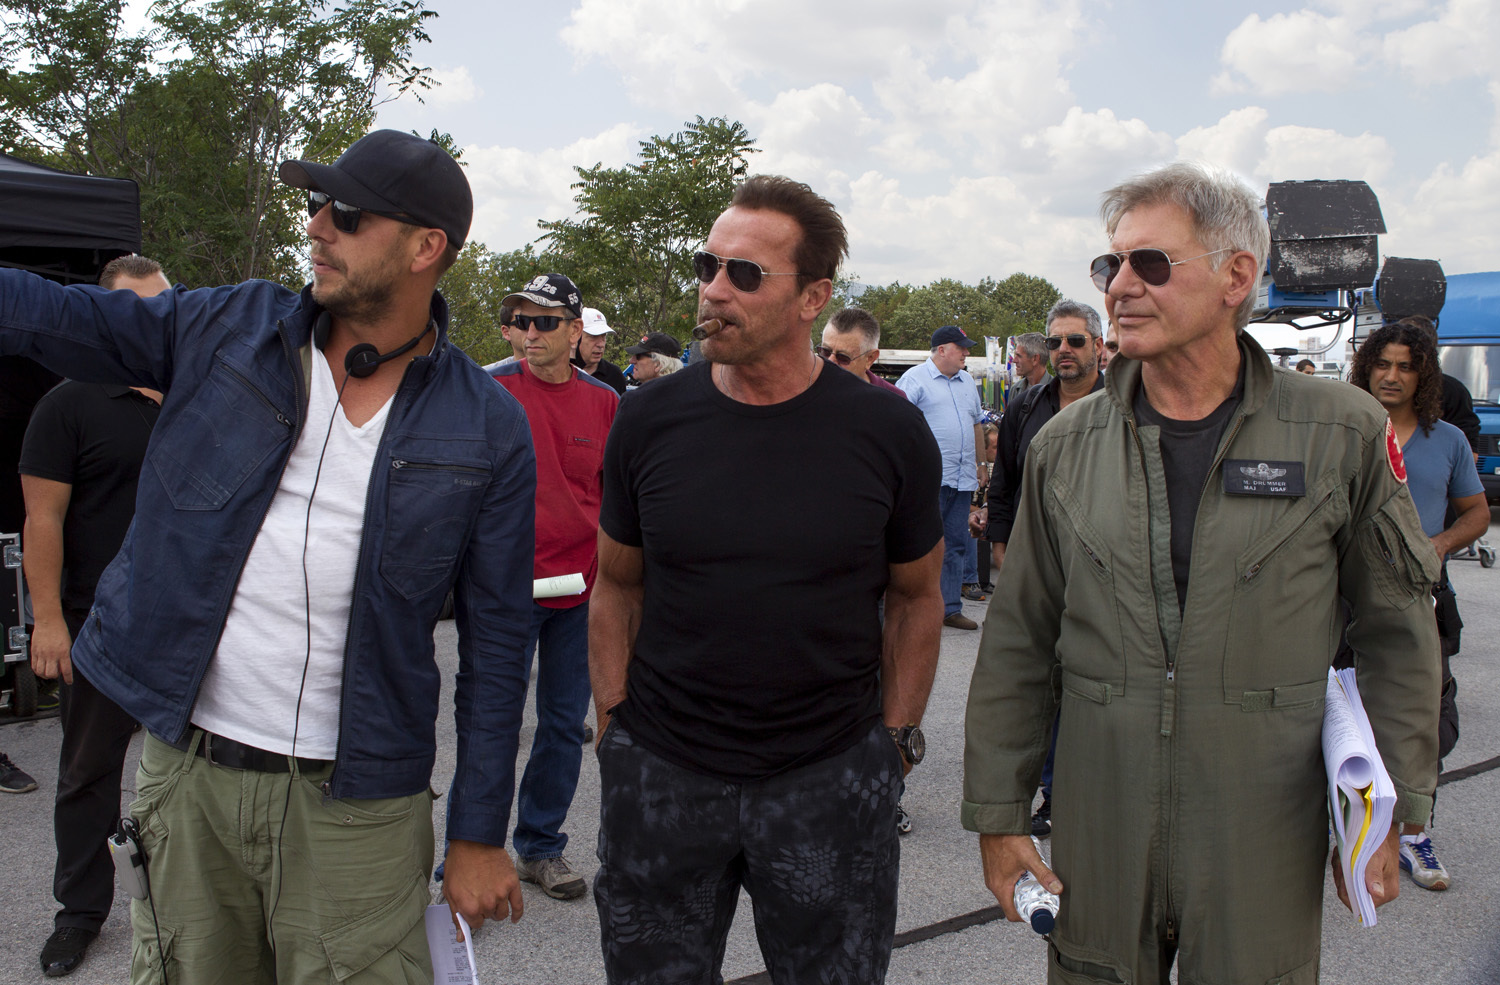 Harrison Ford, Arnold Schwarzenegger and Patrick Hughes in Nesunaikinami 3 (2014)